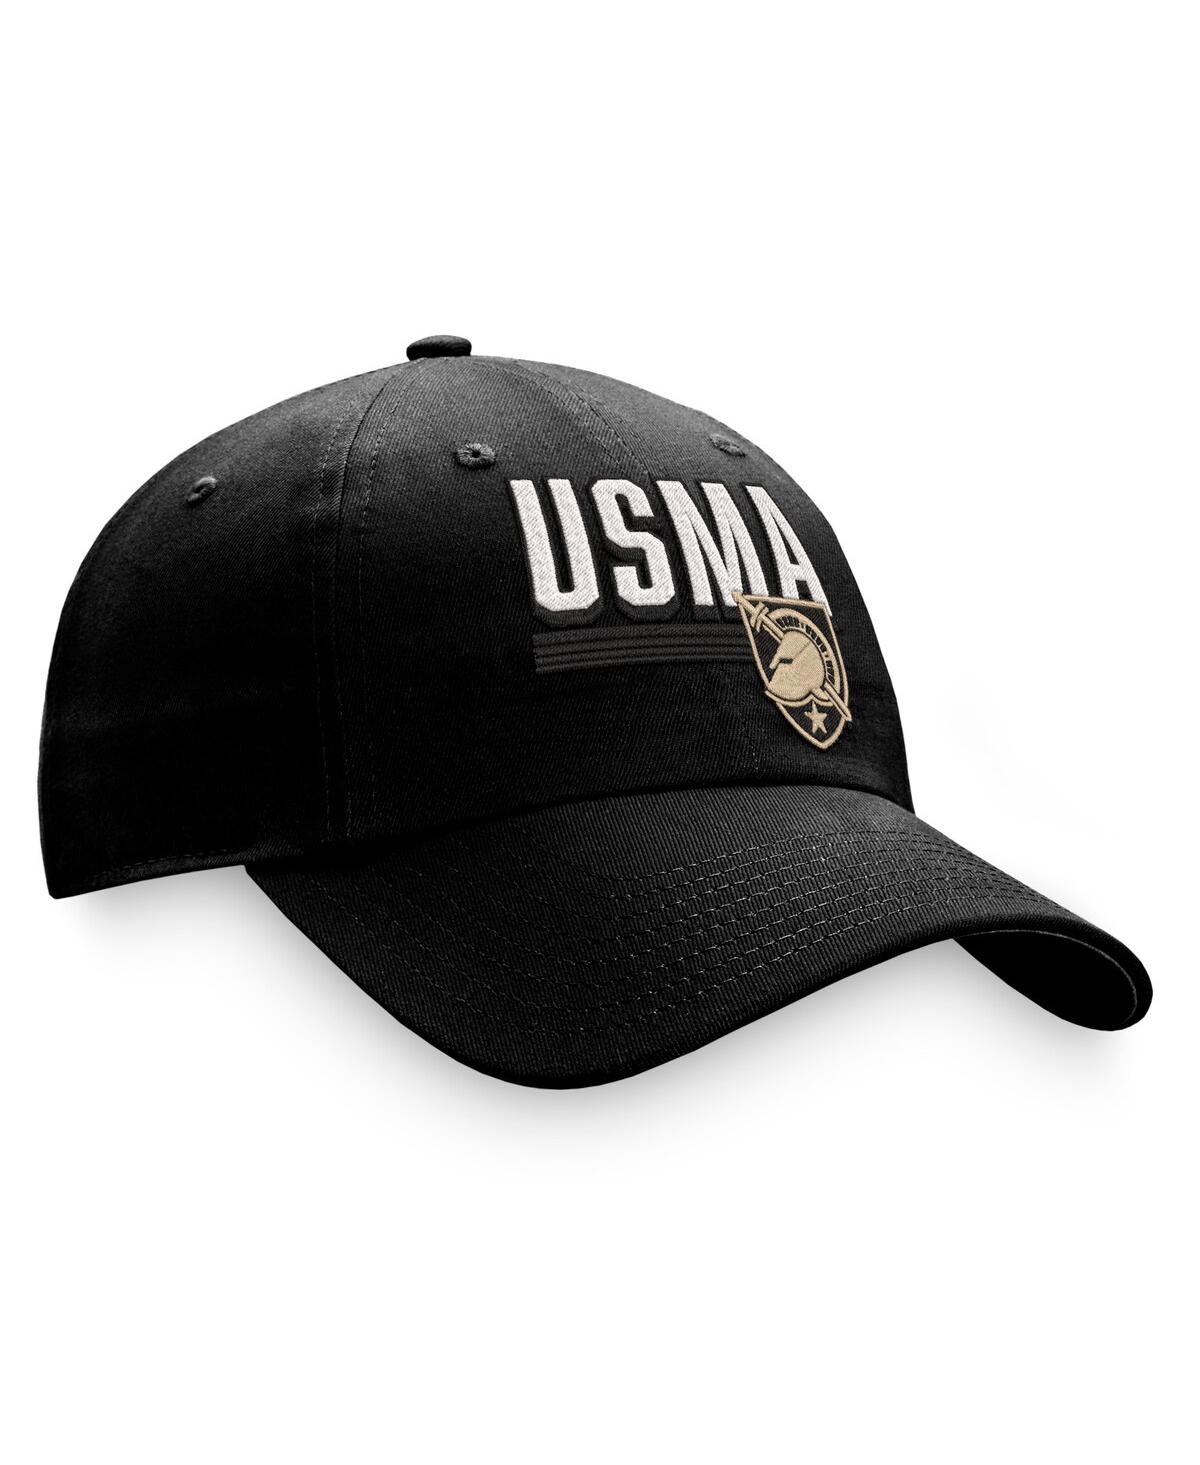 Shop Top Of The World Men's  Black Army Black Knights Slice Adjustable Hat